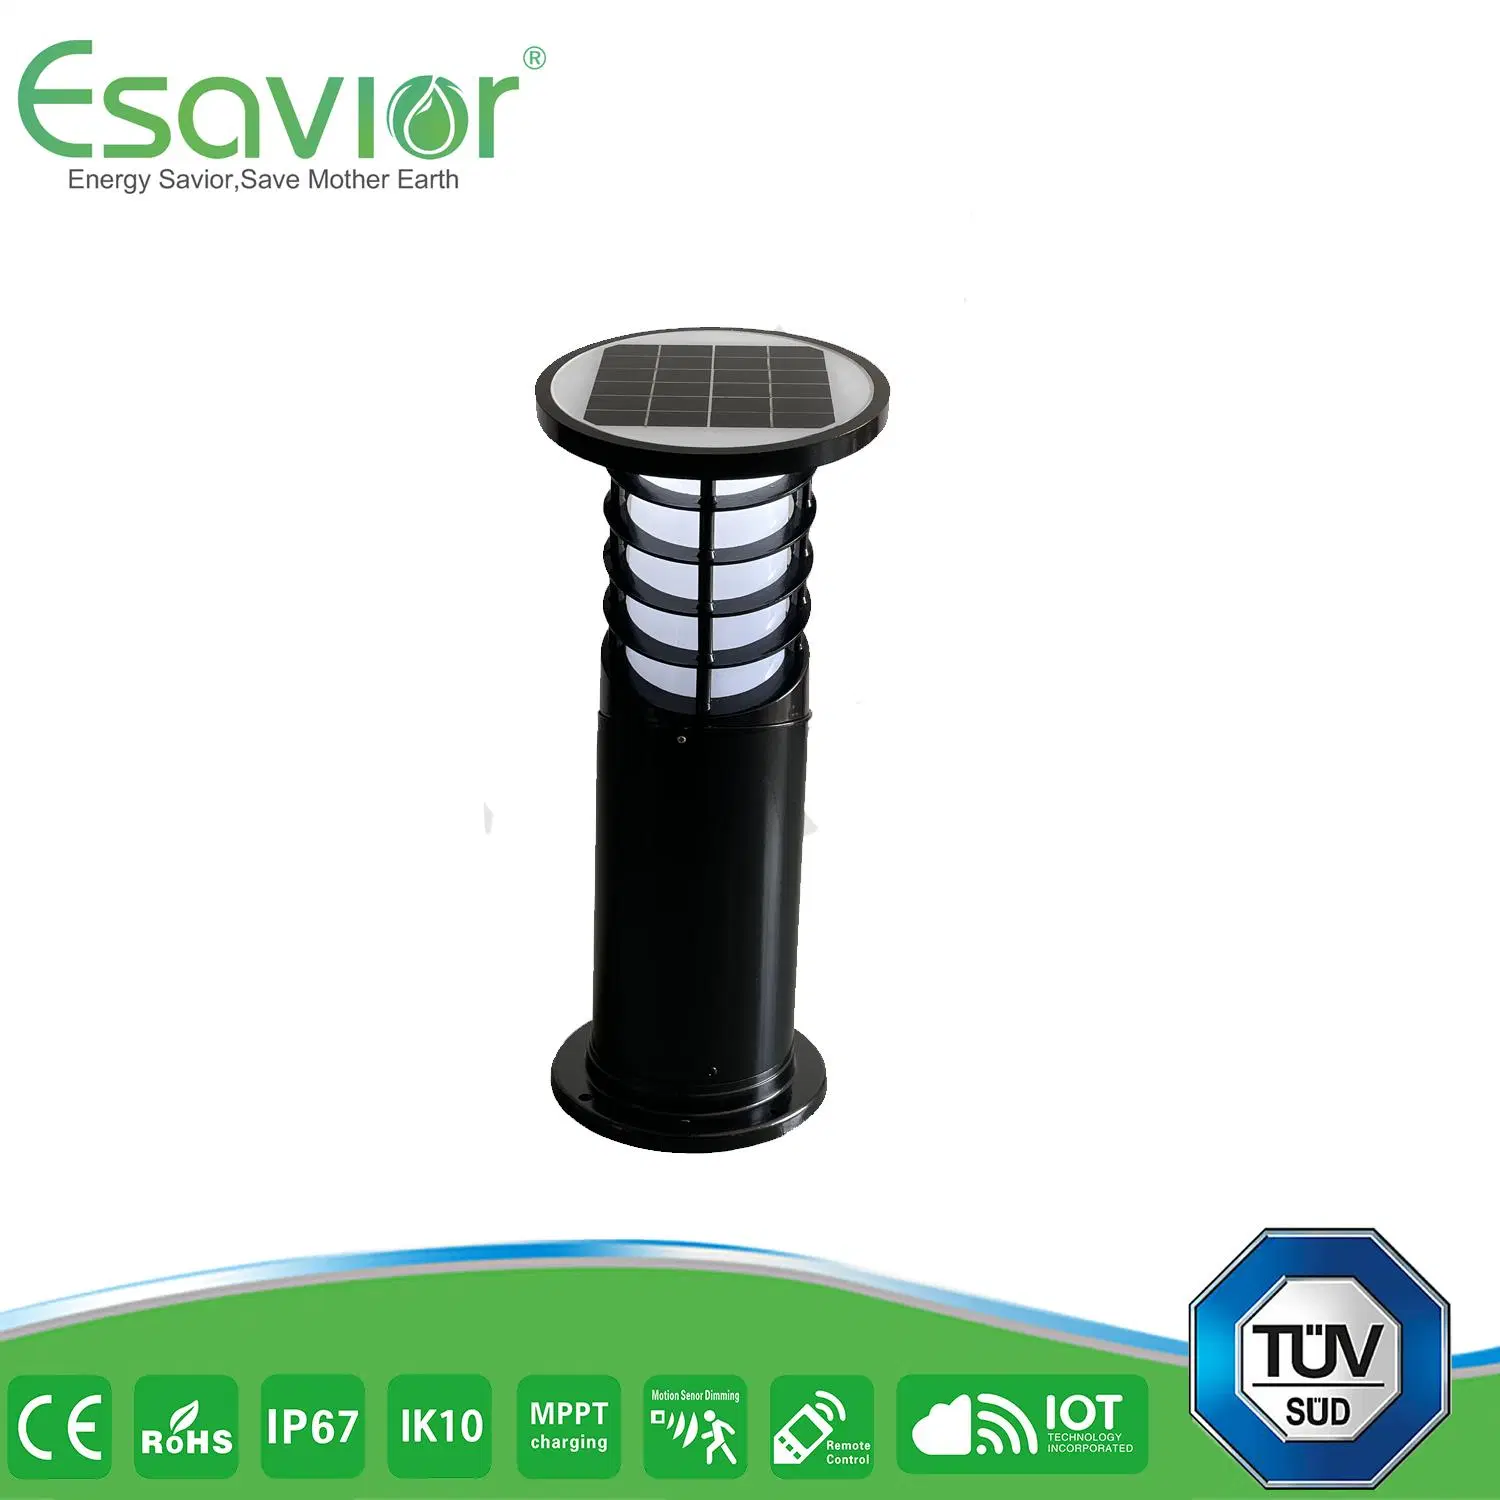 Esavior Solar Powered LED Outdoor Solar Bollard/Lawn/Garden Light